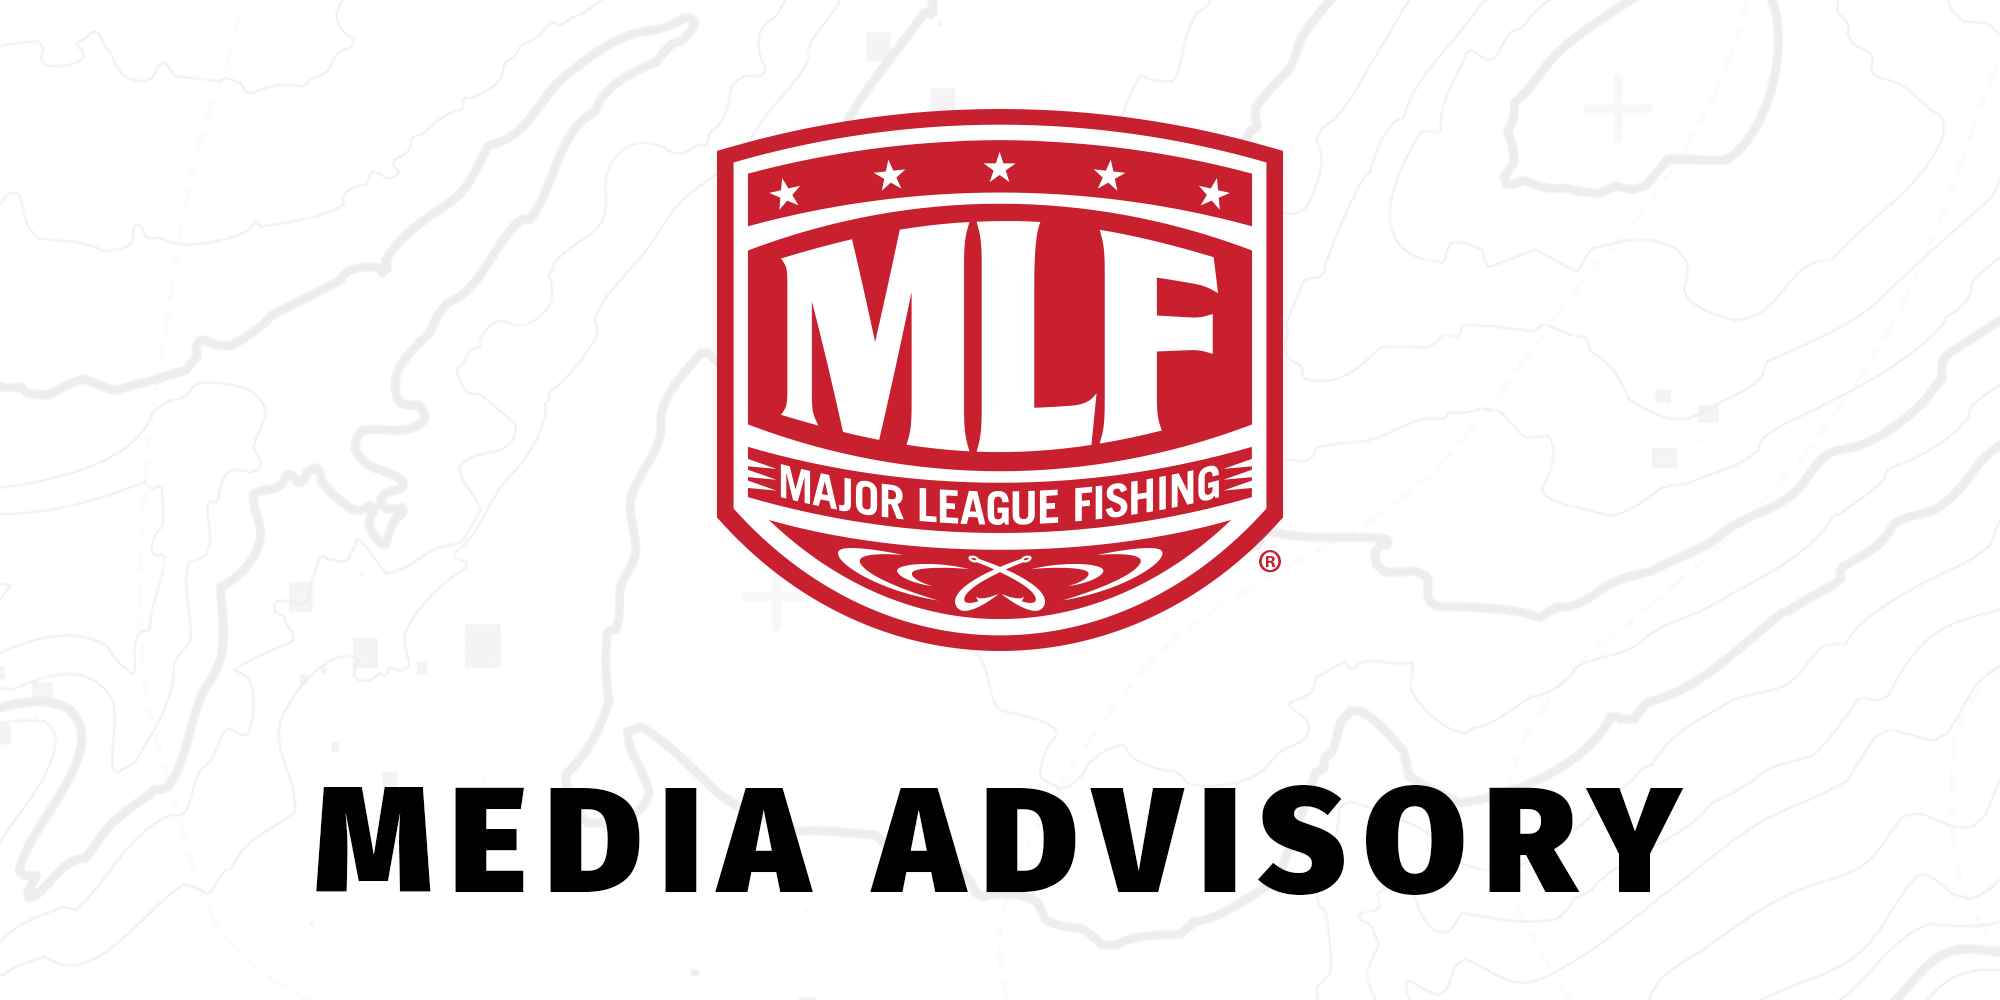 Fresno State fiesta - Major League Fishing